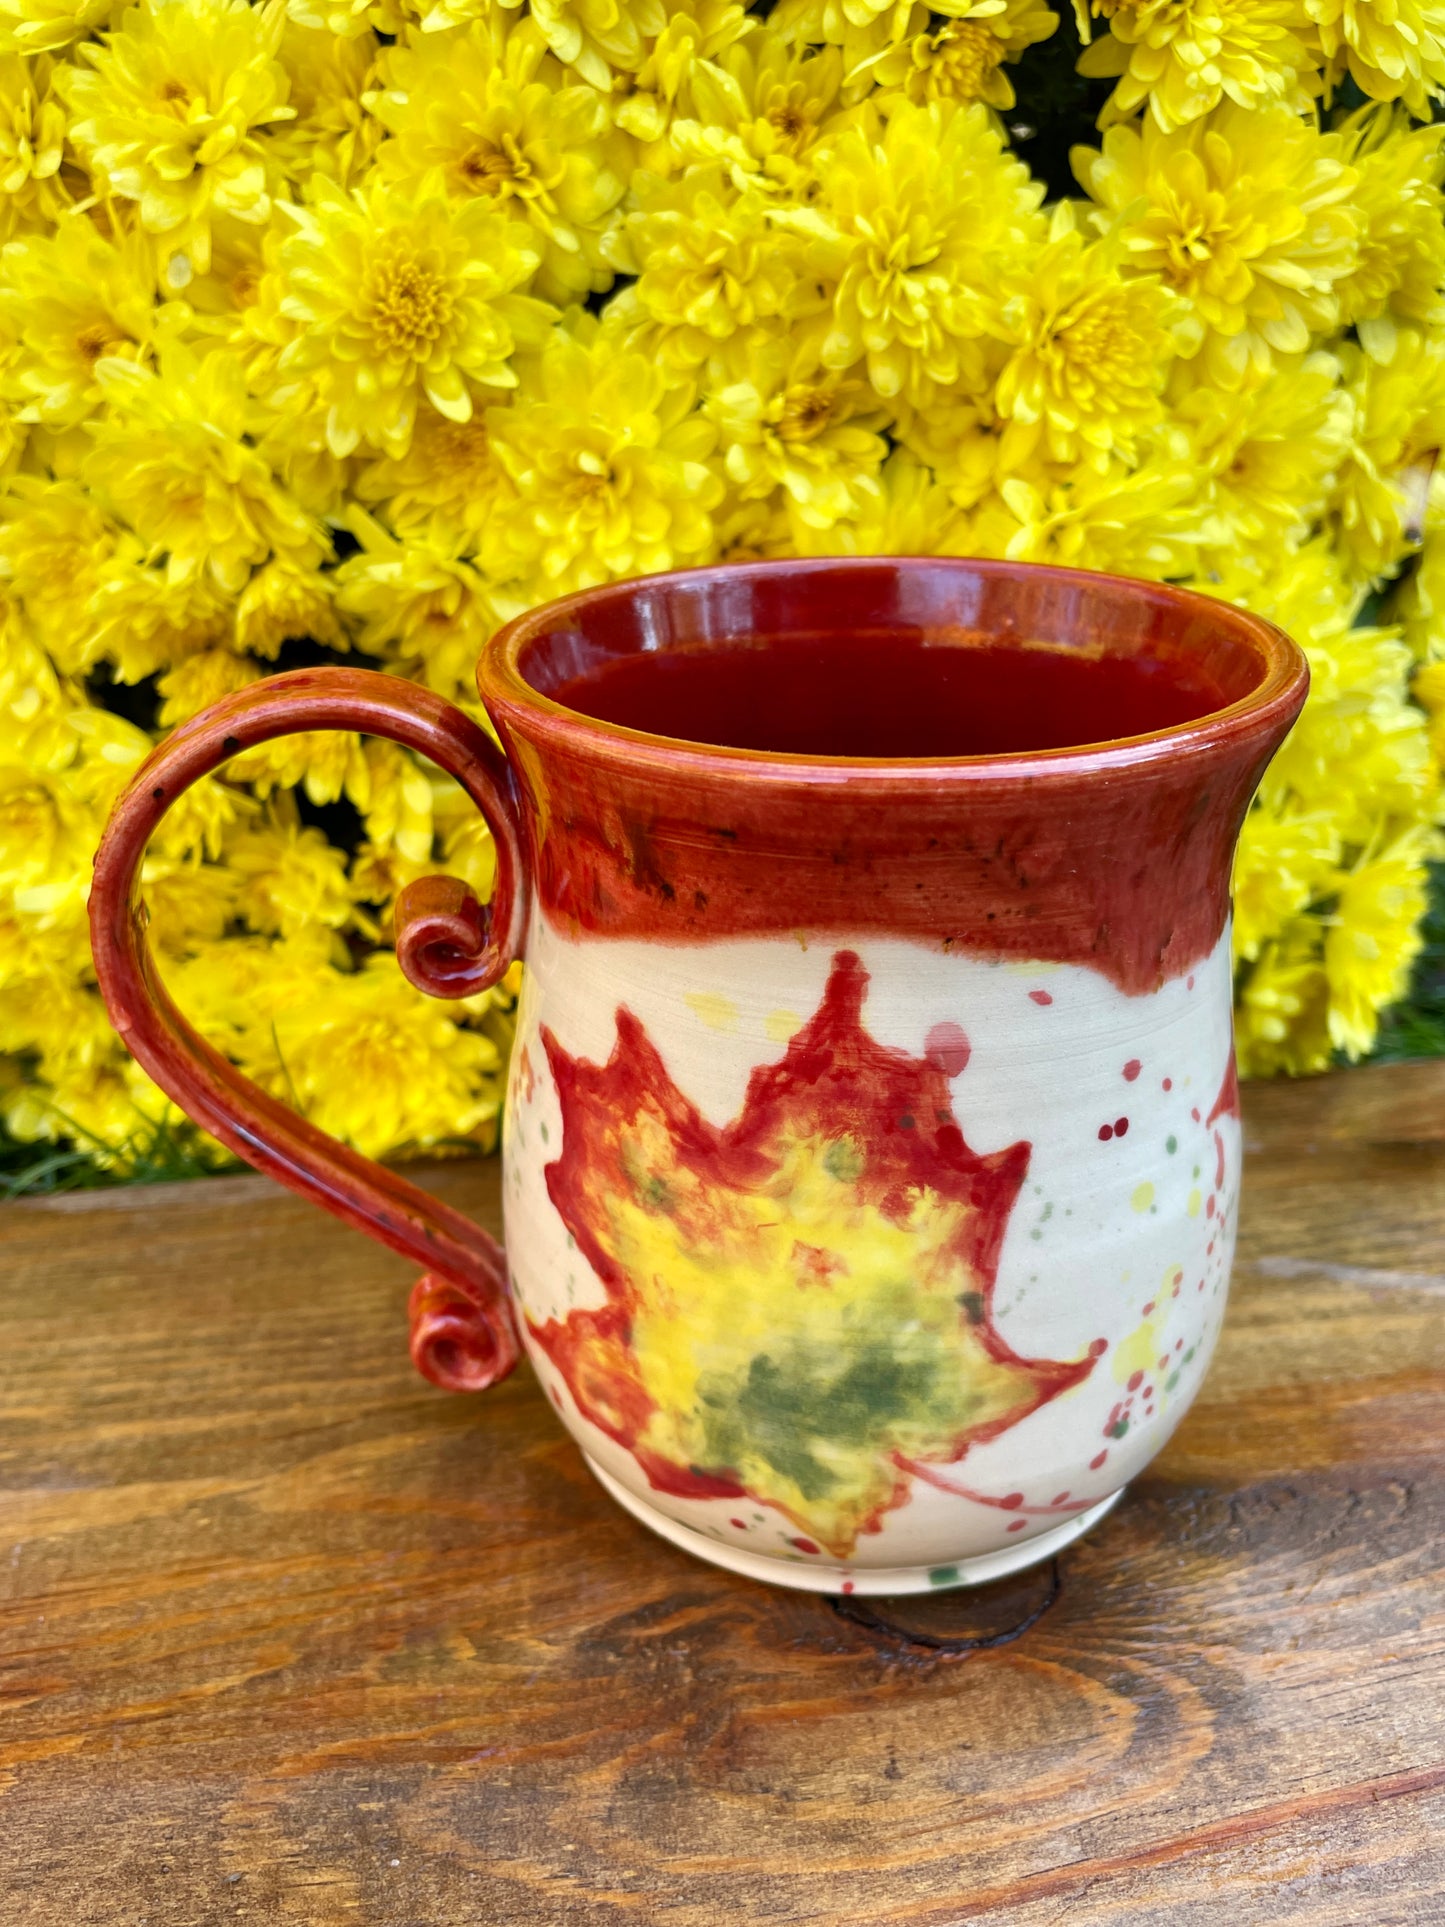 Painted fall mug